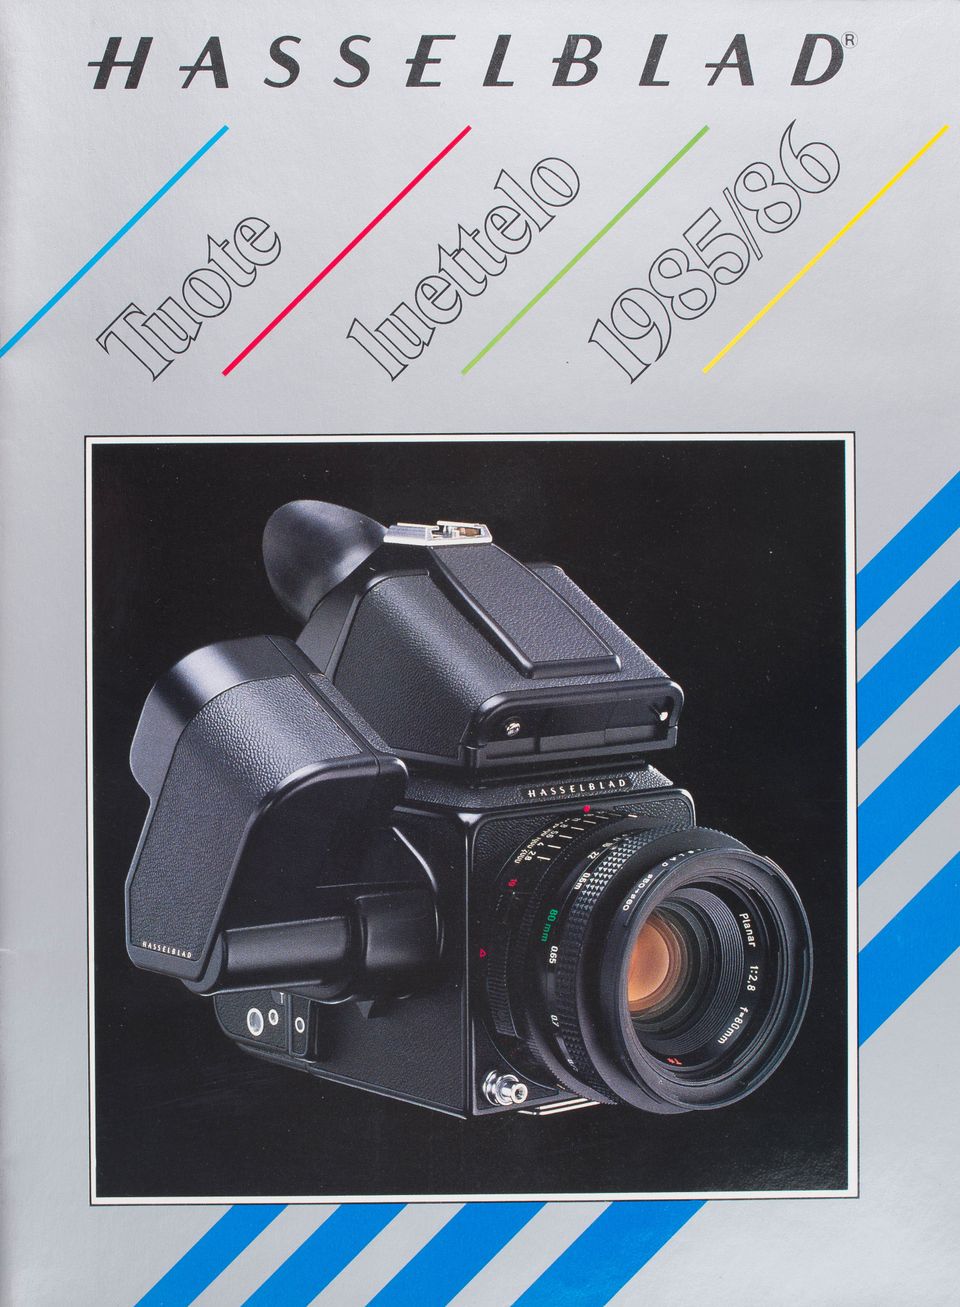 Hasselblad tuote luettelo 1985/86